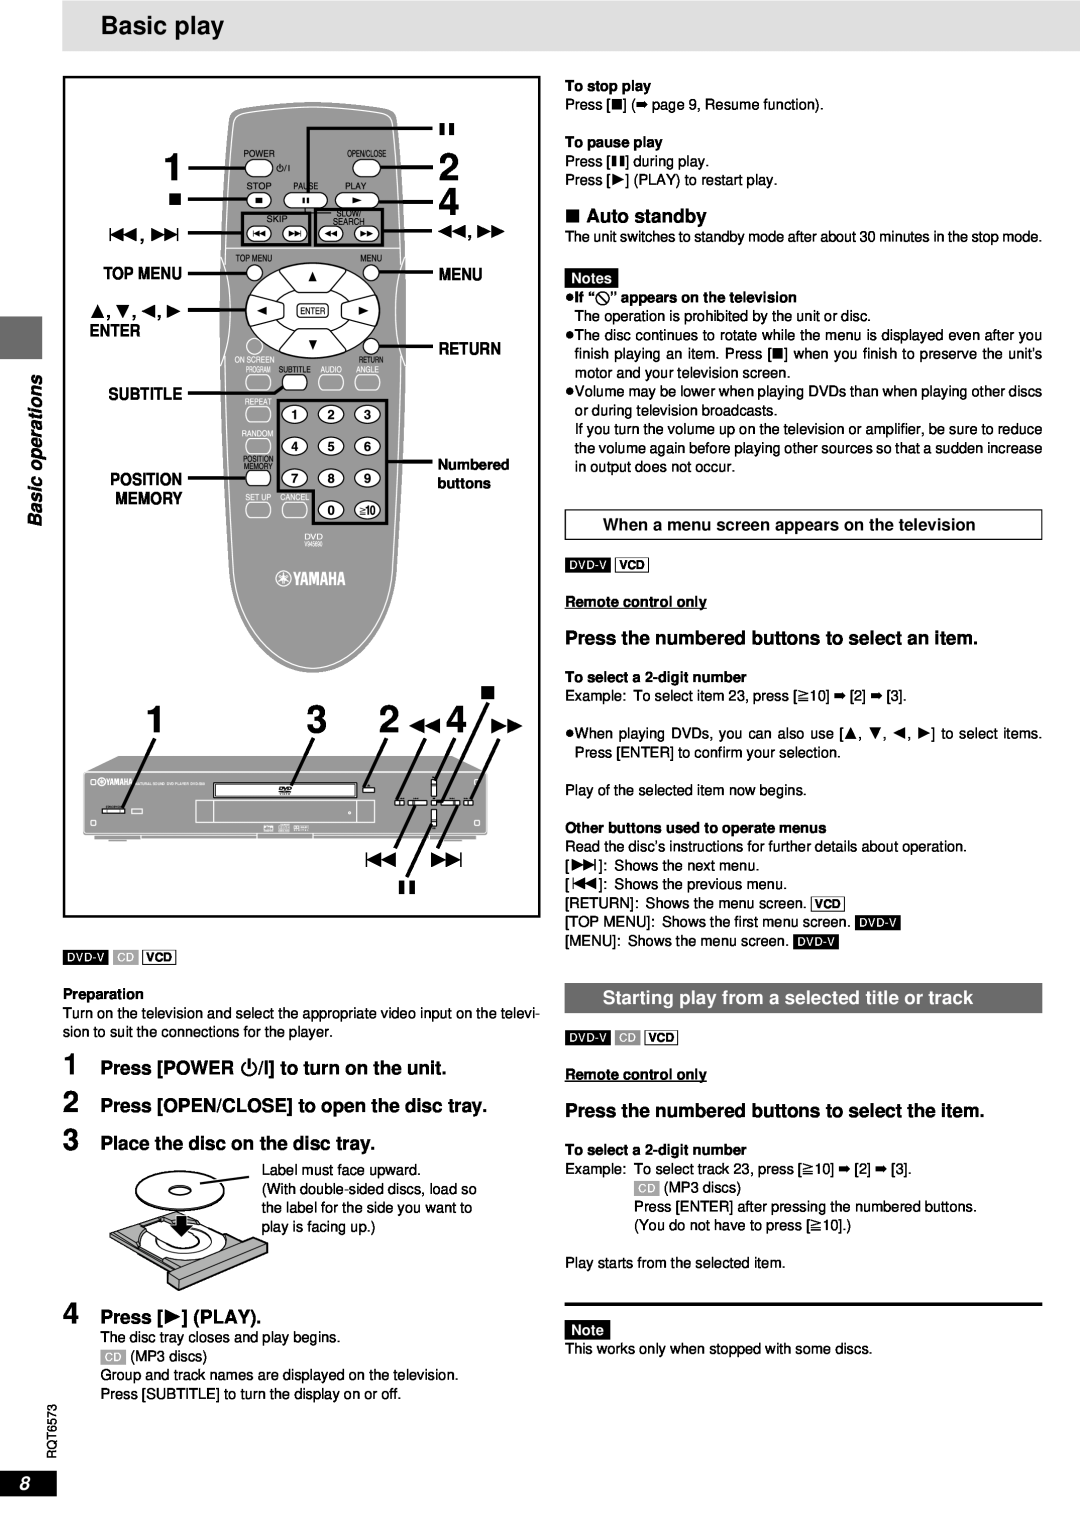 Yamaha HOMETHEATER SOUND SYSTEM Basic play, operations, Press POWER Í/I to turn on the unit, ∫Auto standby, Press 1 PLAY 